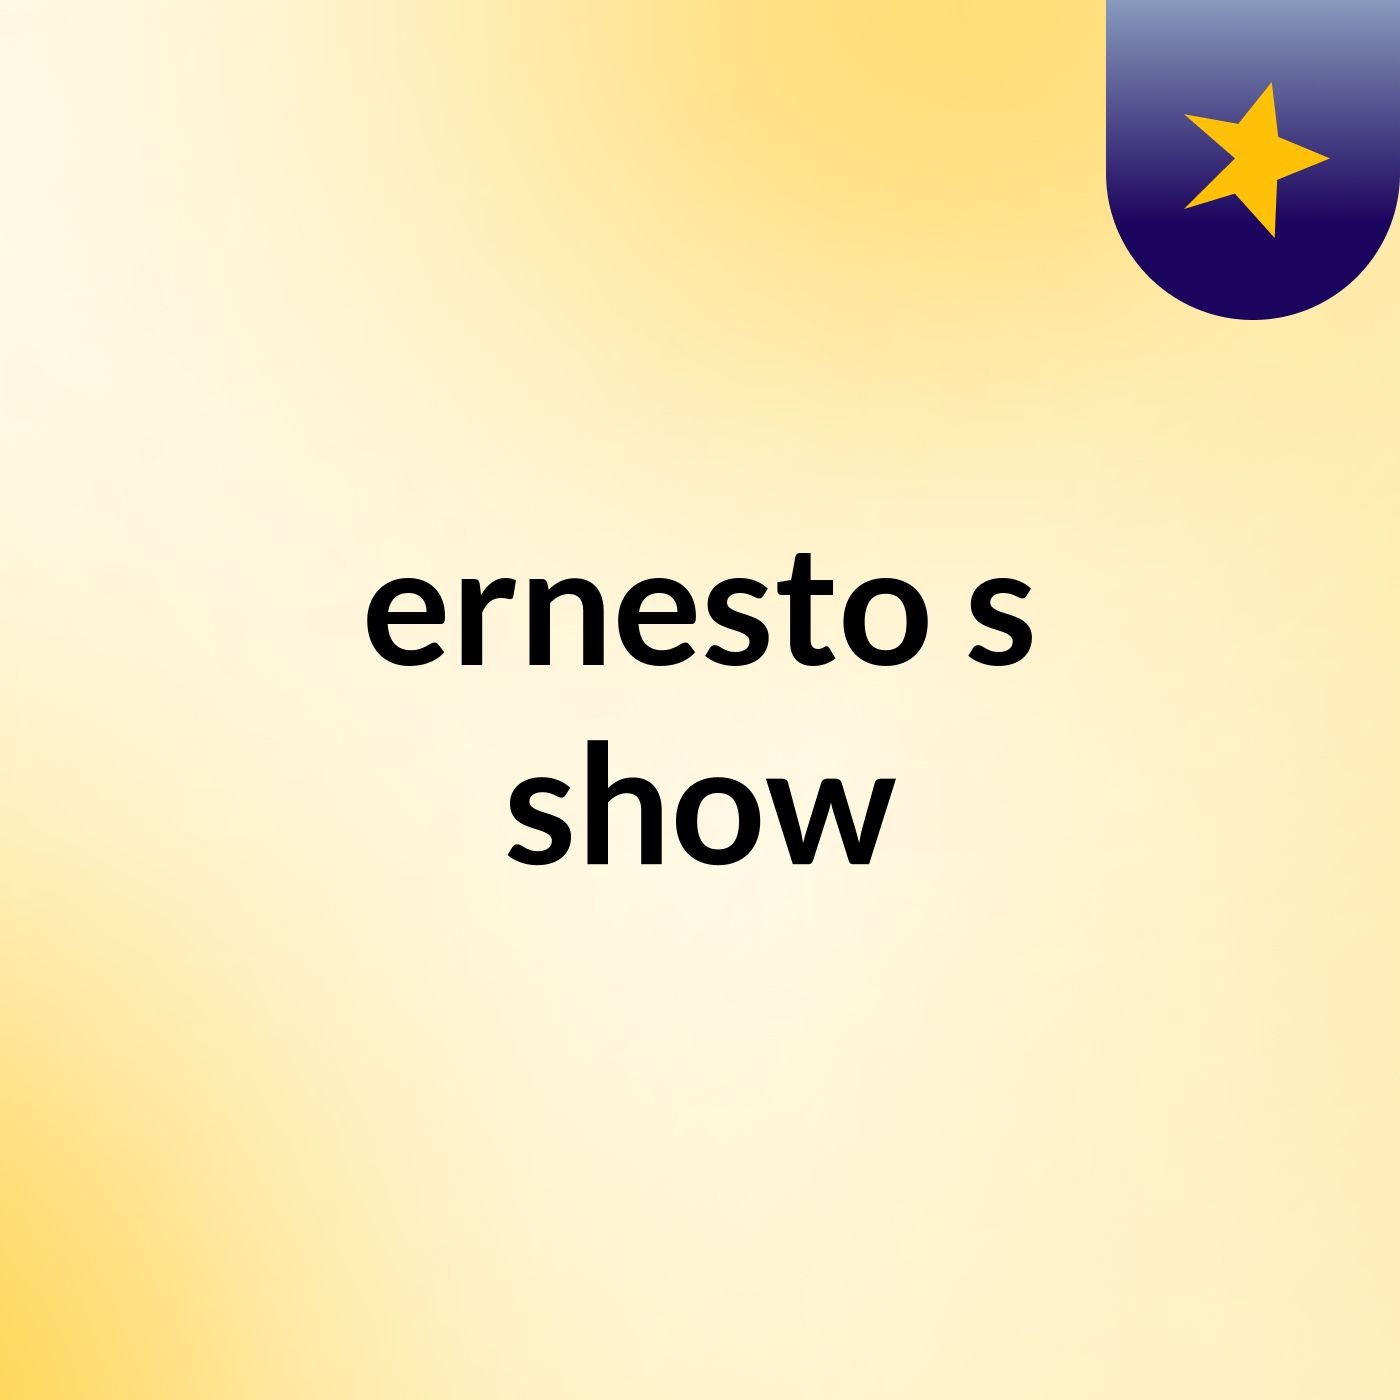 ernesto's show